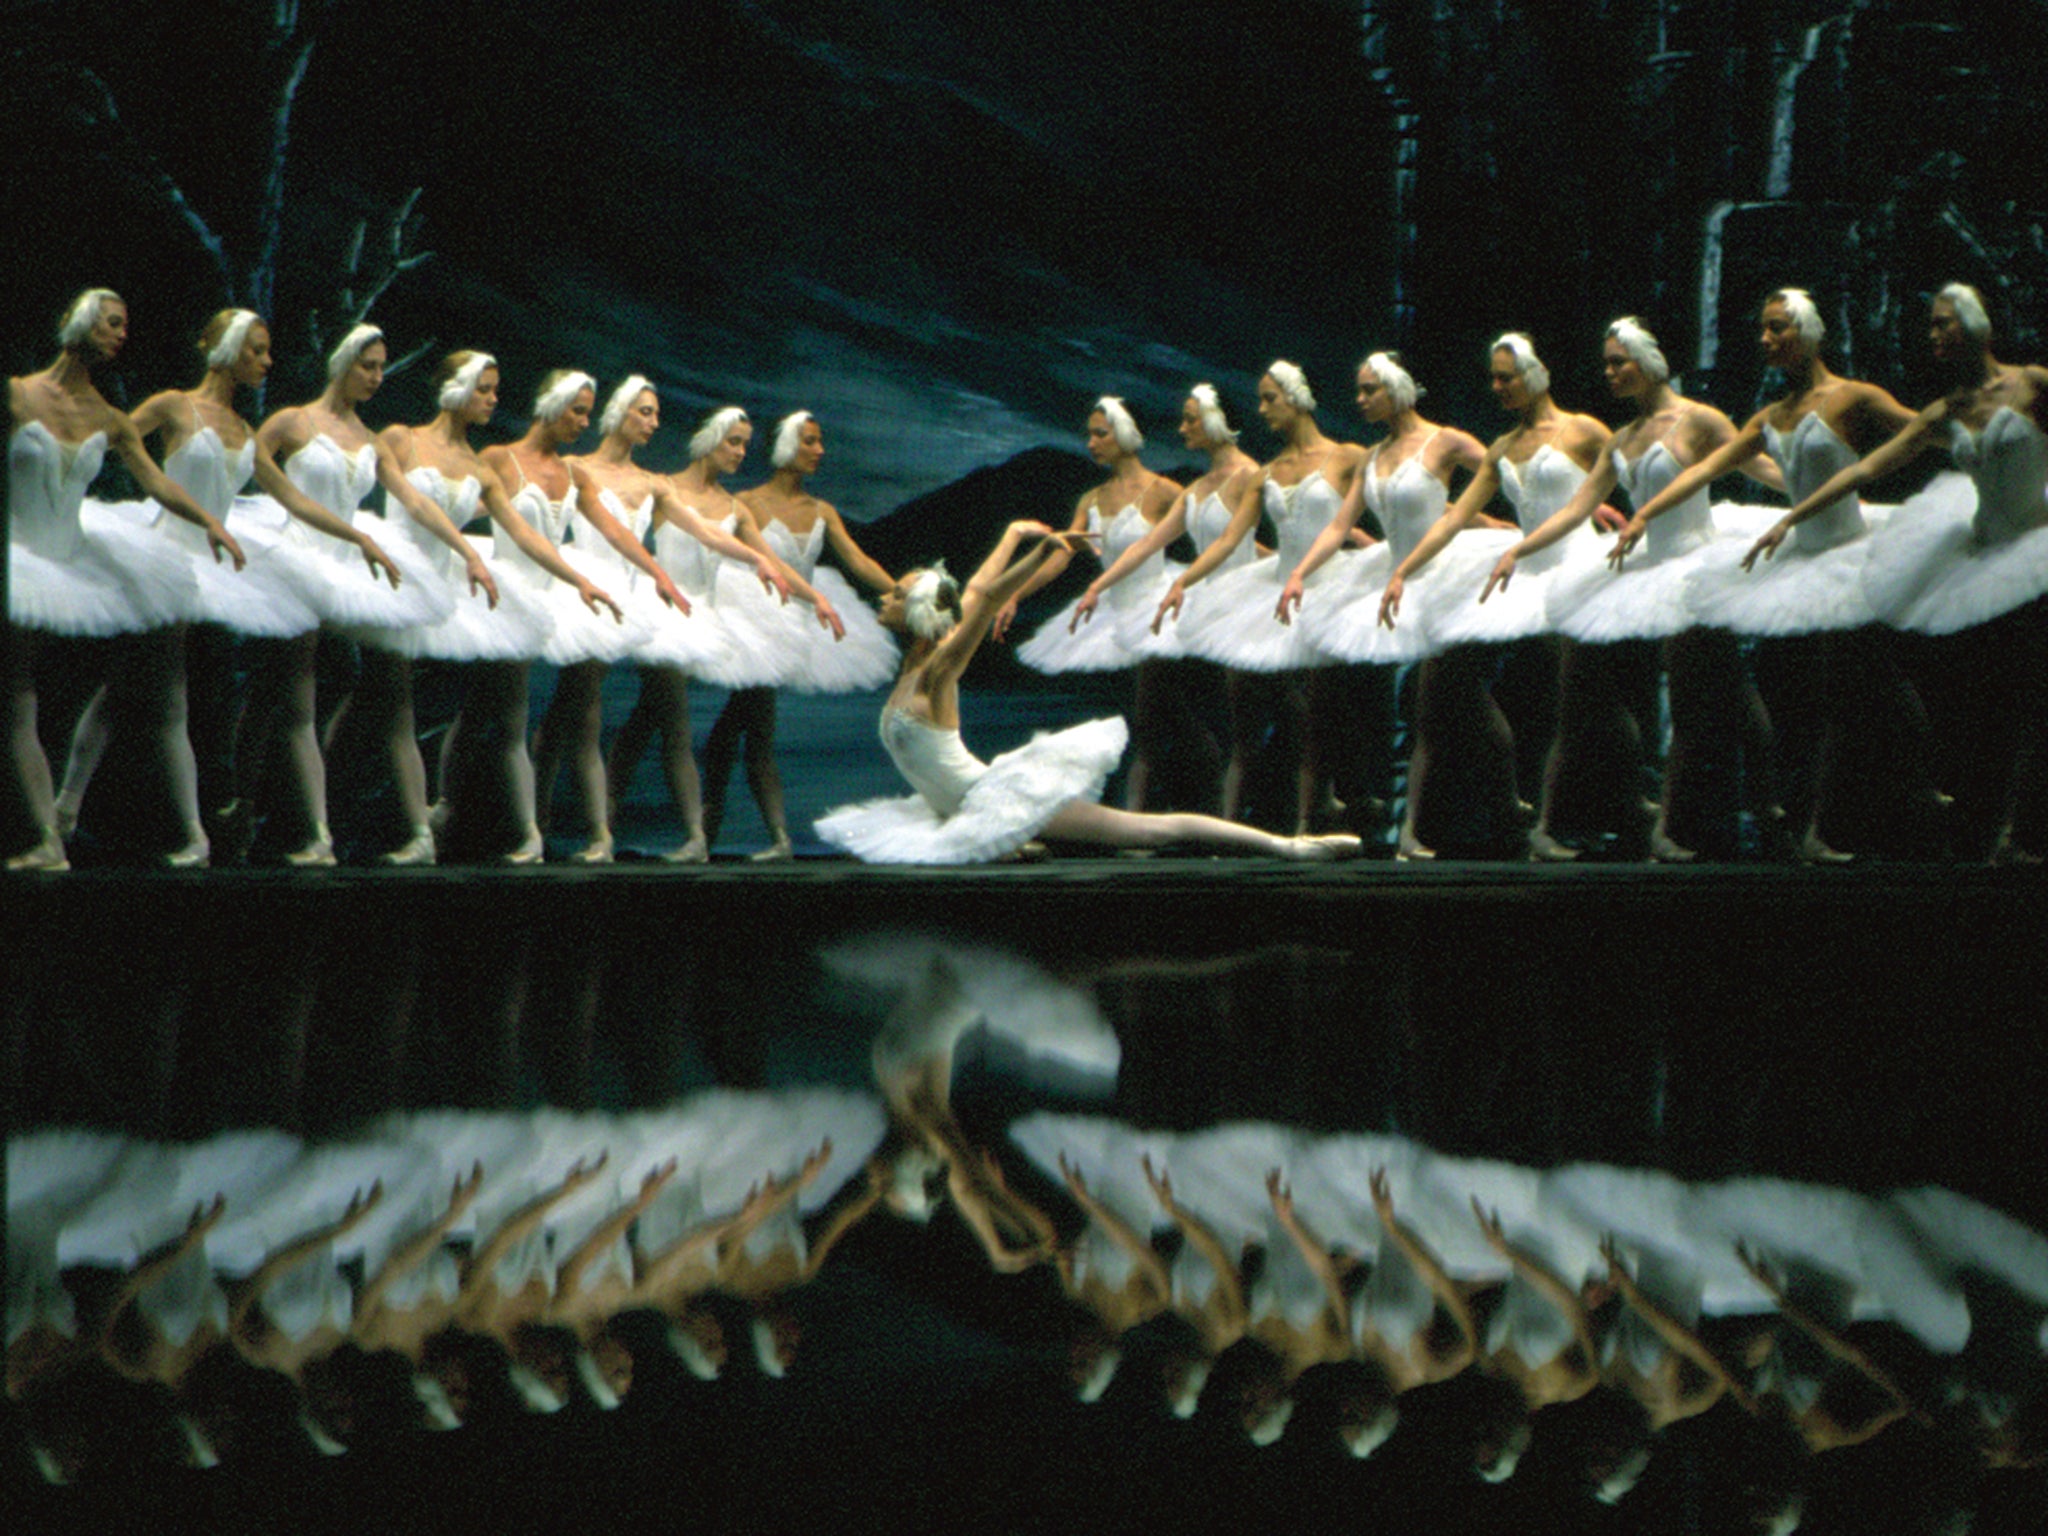 St Petersburg Ballet Theatre's production is is led by homegrown ballerina Irina Kolesnikova